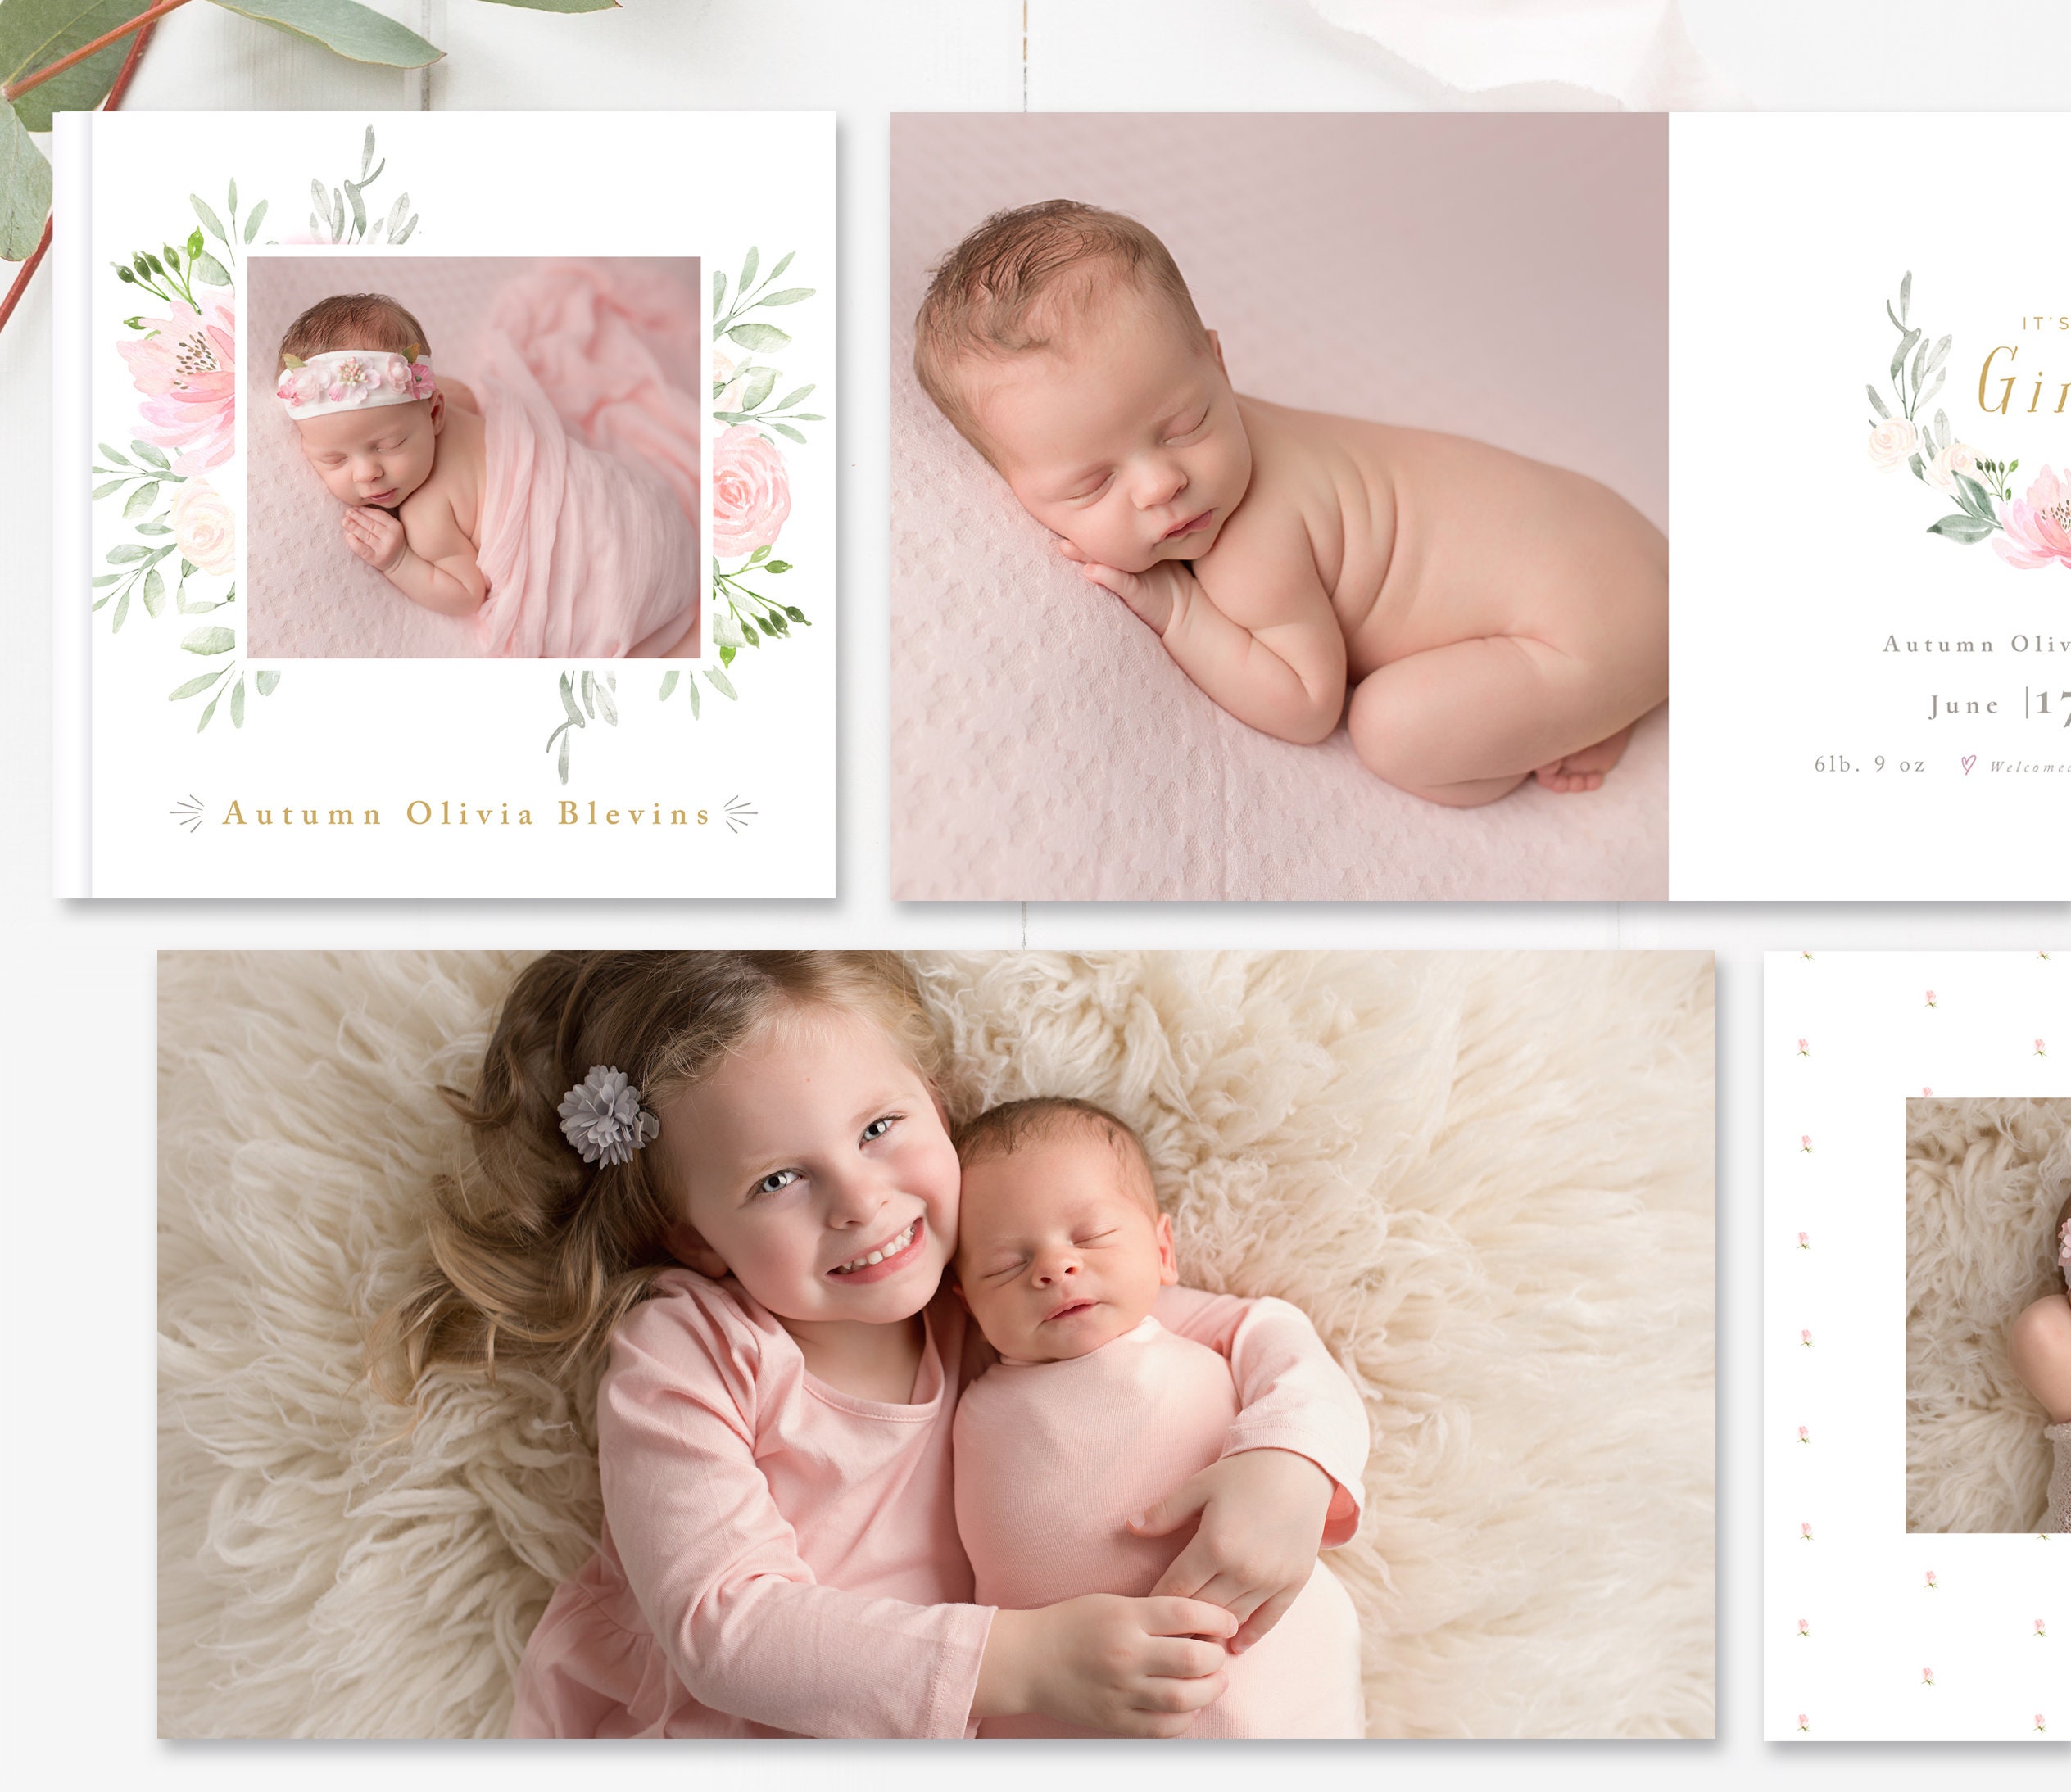 Baby Album Template for Photographers Baby Photo Book Template Printable  Album Template for Photoshop Newborn Baby Album 